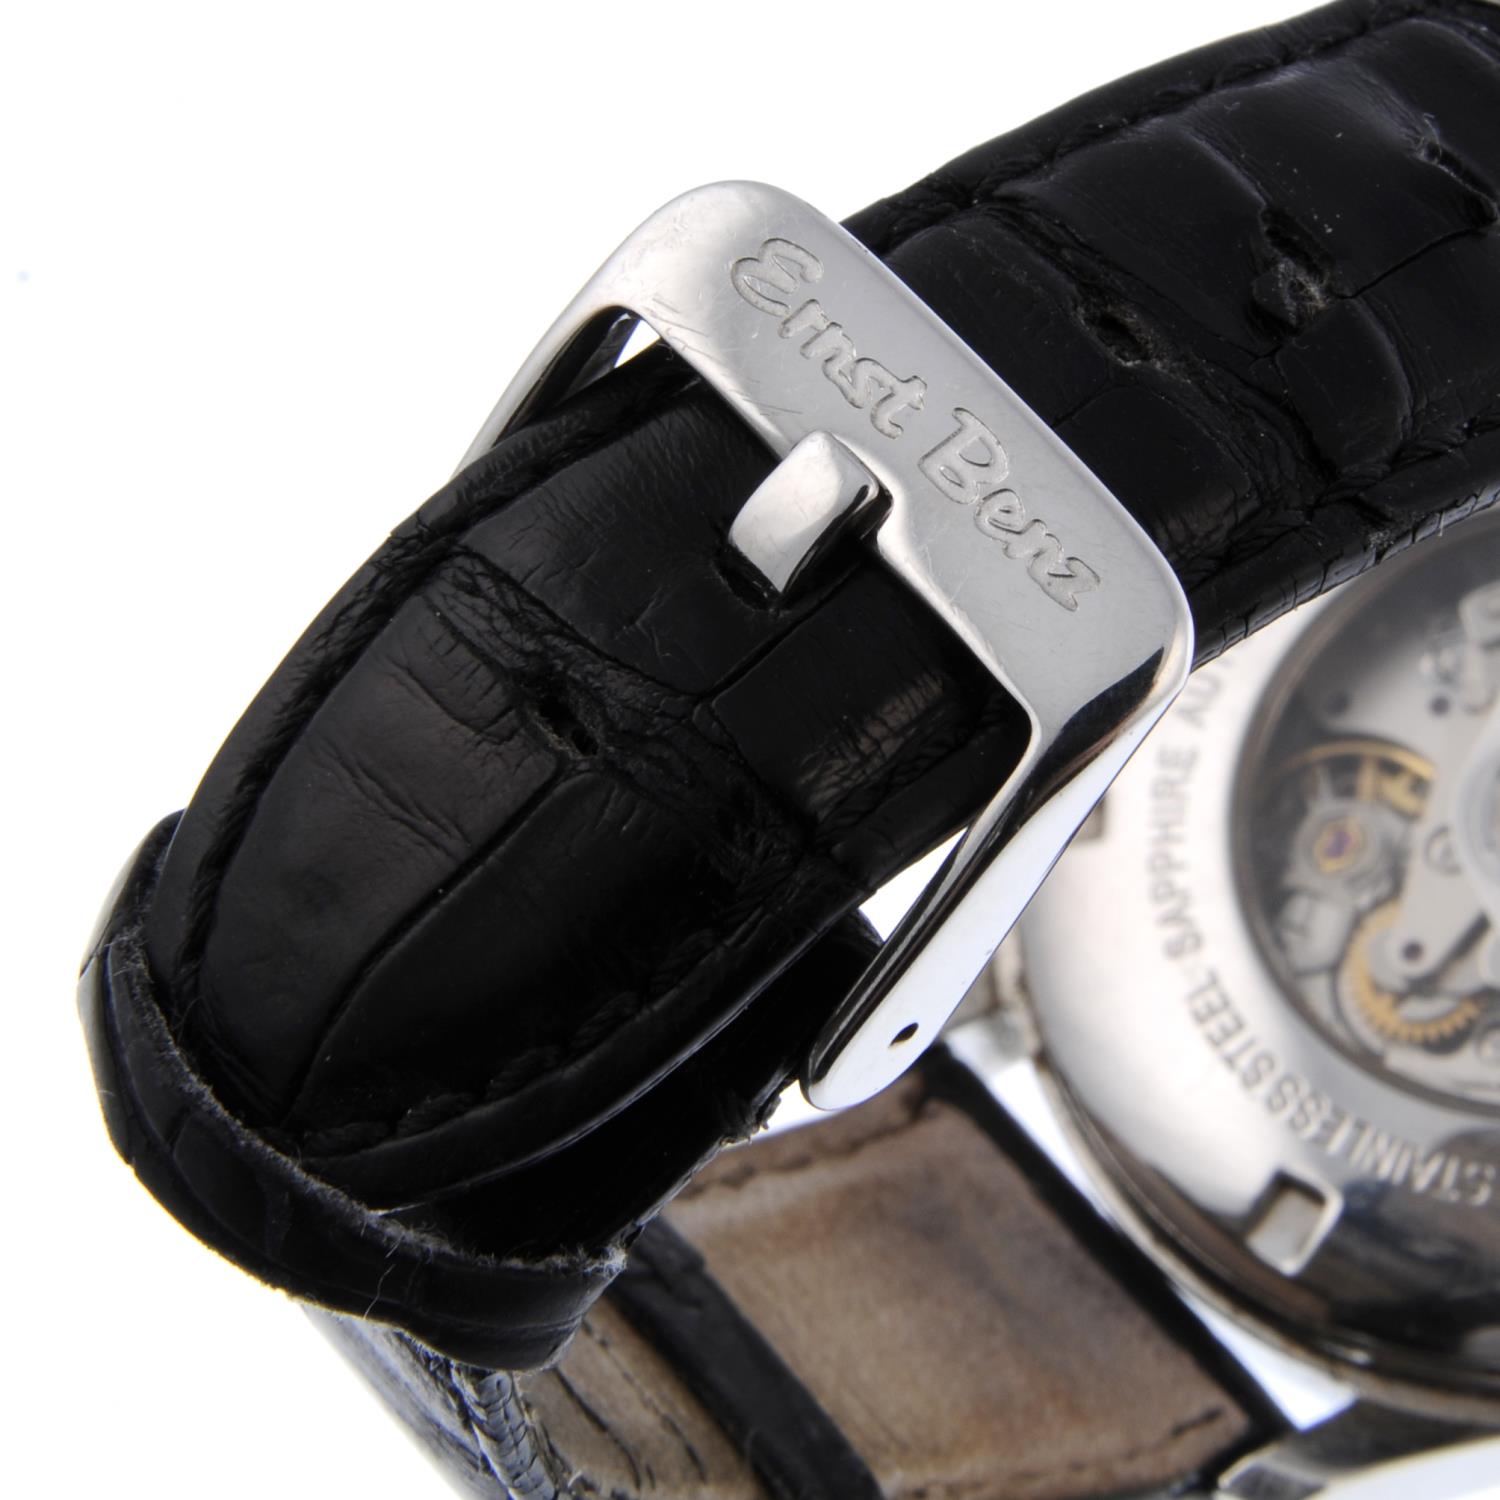 ERNST BENZ - a gentleman's Chronolunar chronograph wrist watch. - Image 2 of 4